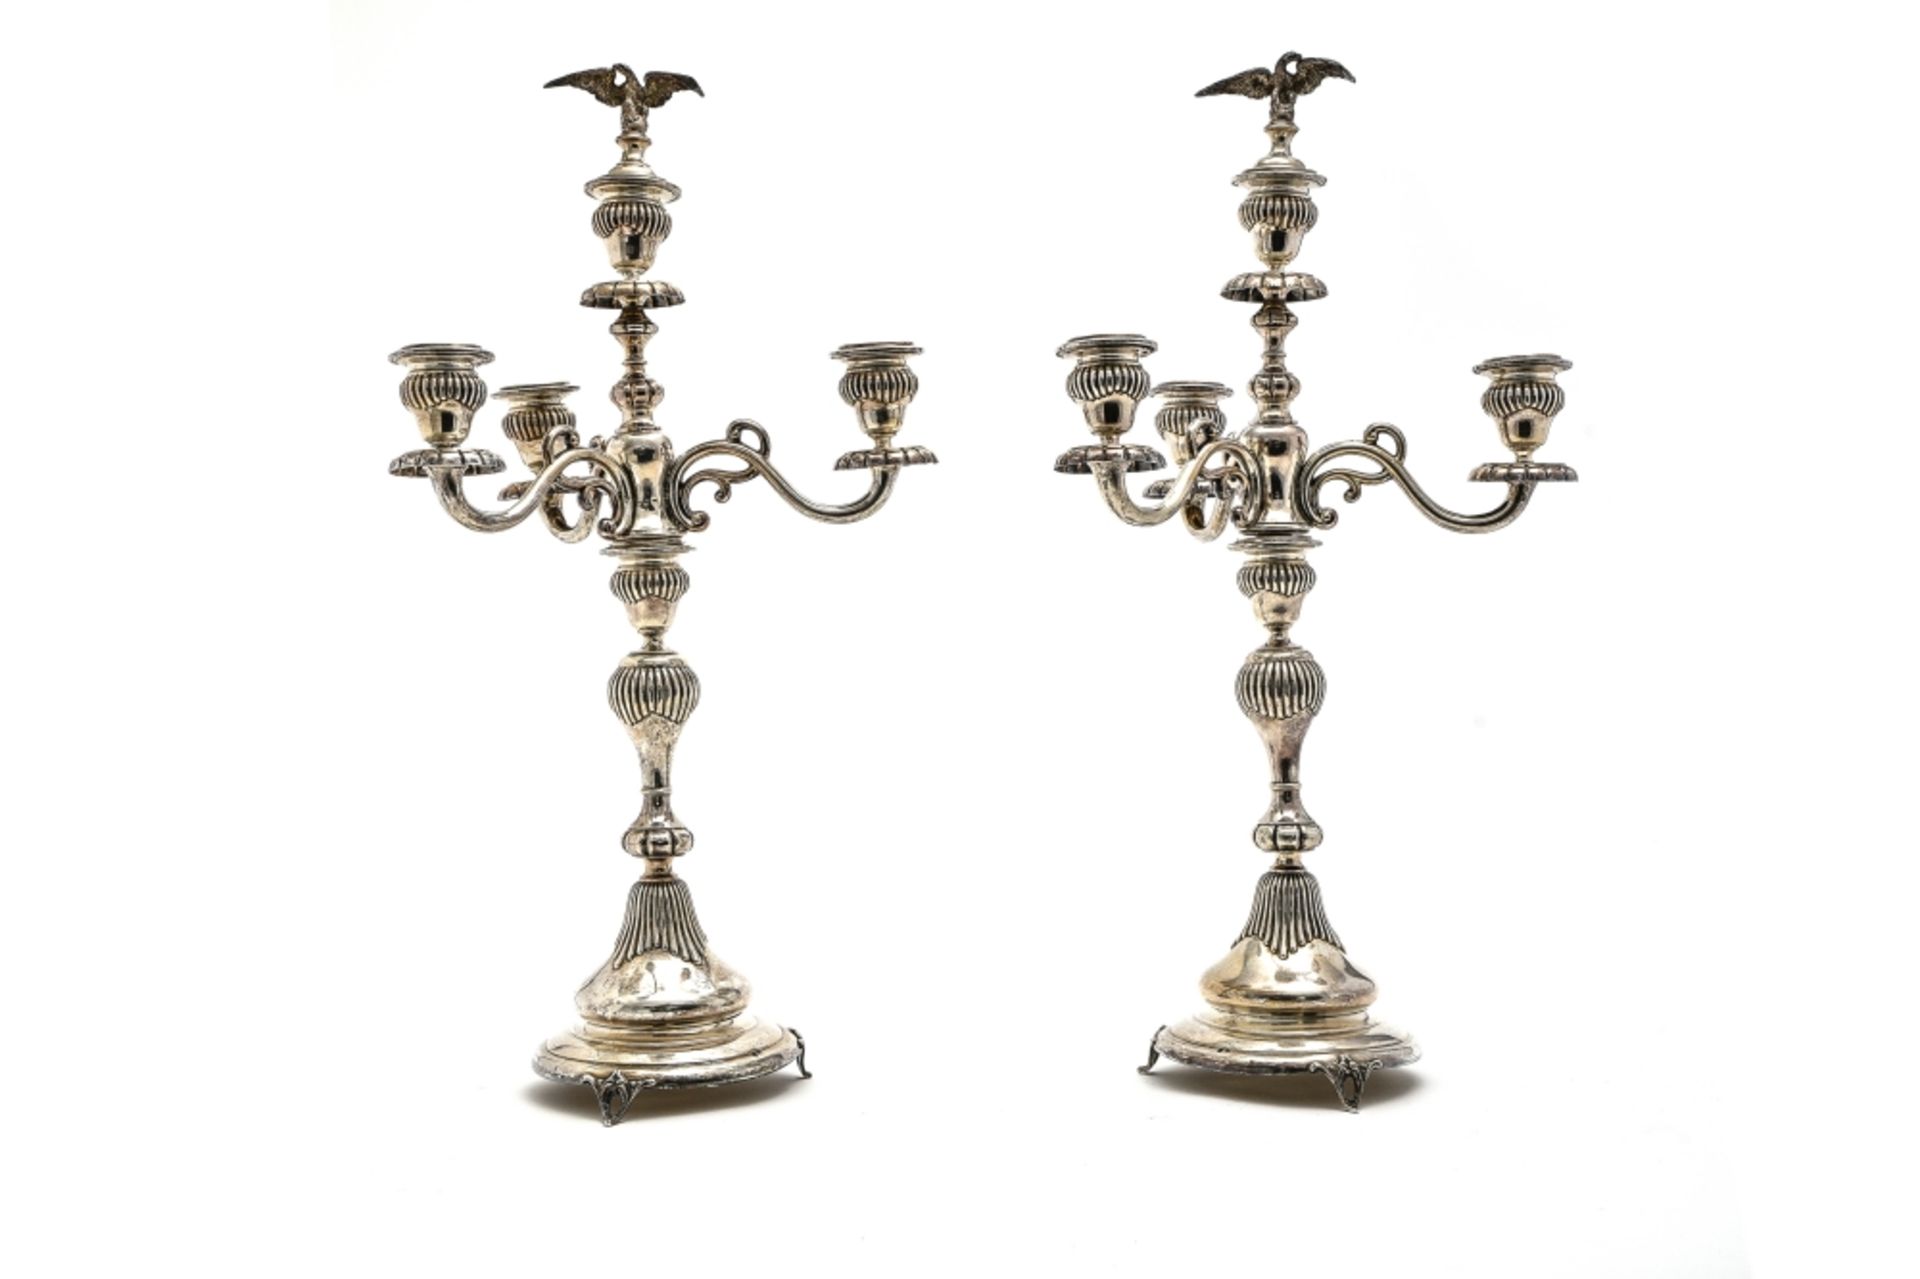 Large pair of eagle candelabras AUSTRIA-HUNGARY, LATE 19TH CENTURY 800 silver, hallmarks: guarantee,